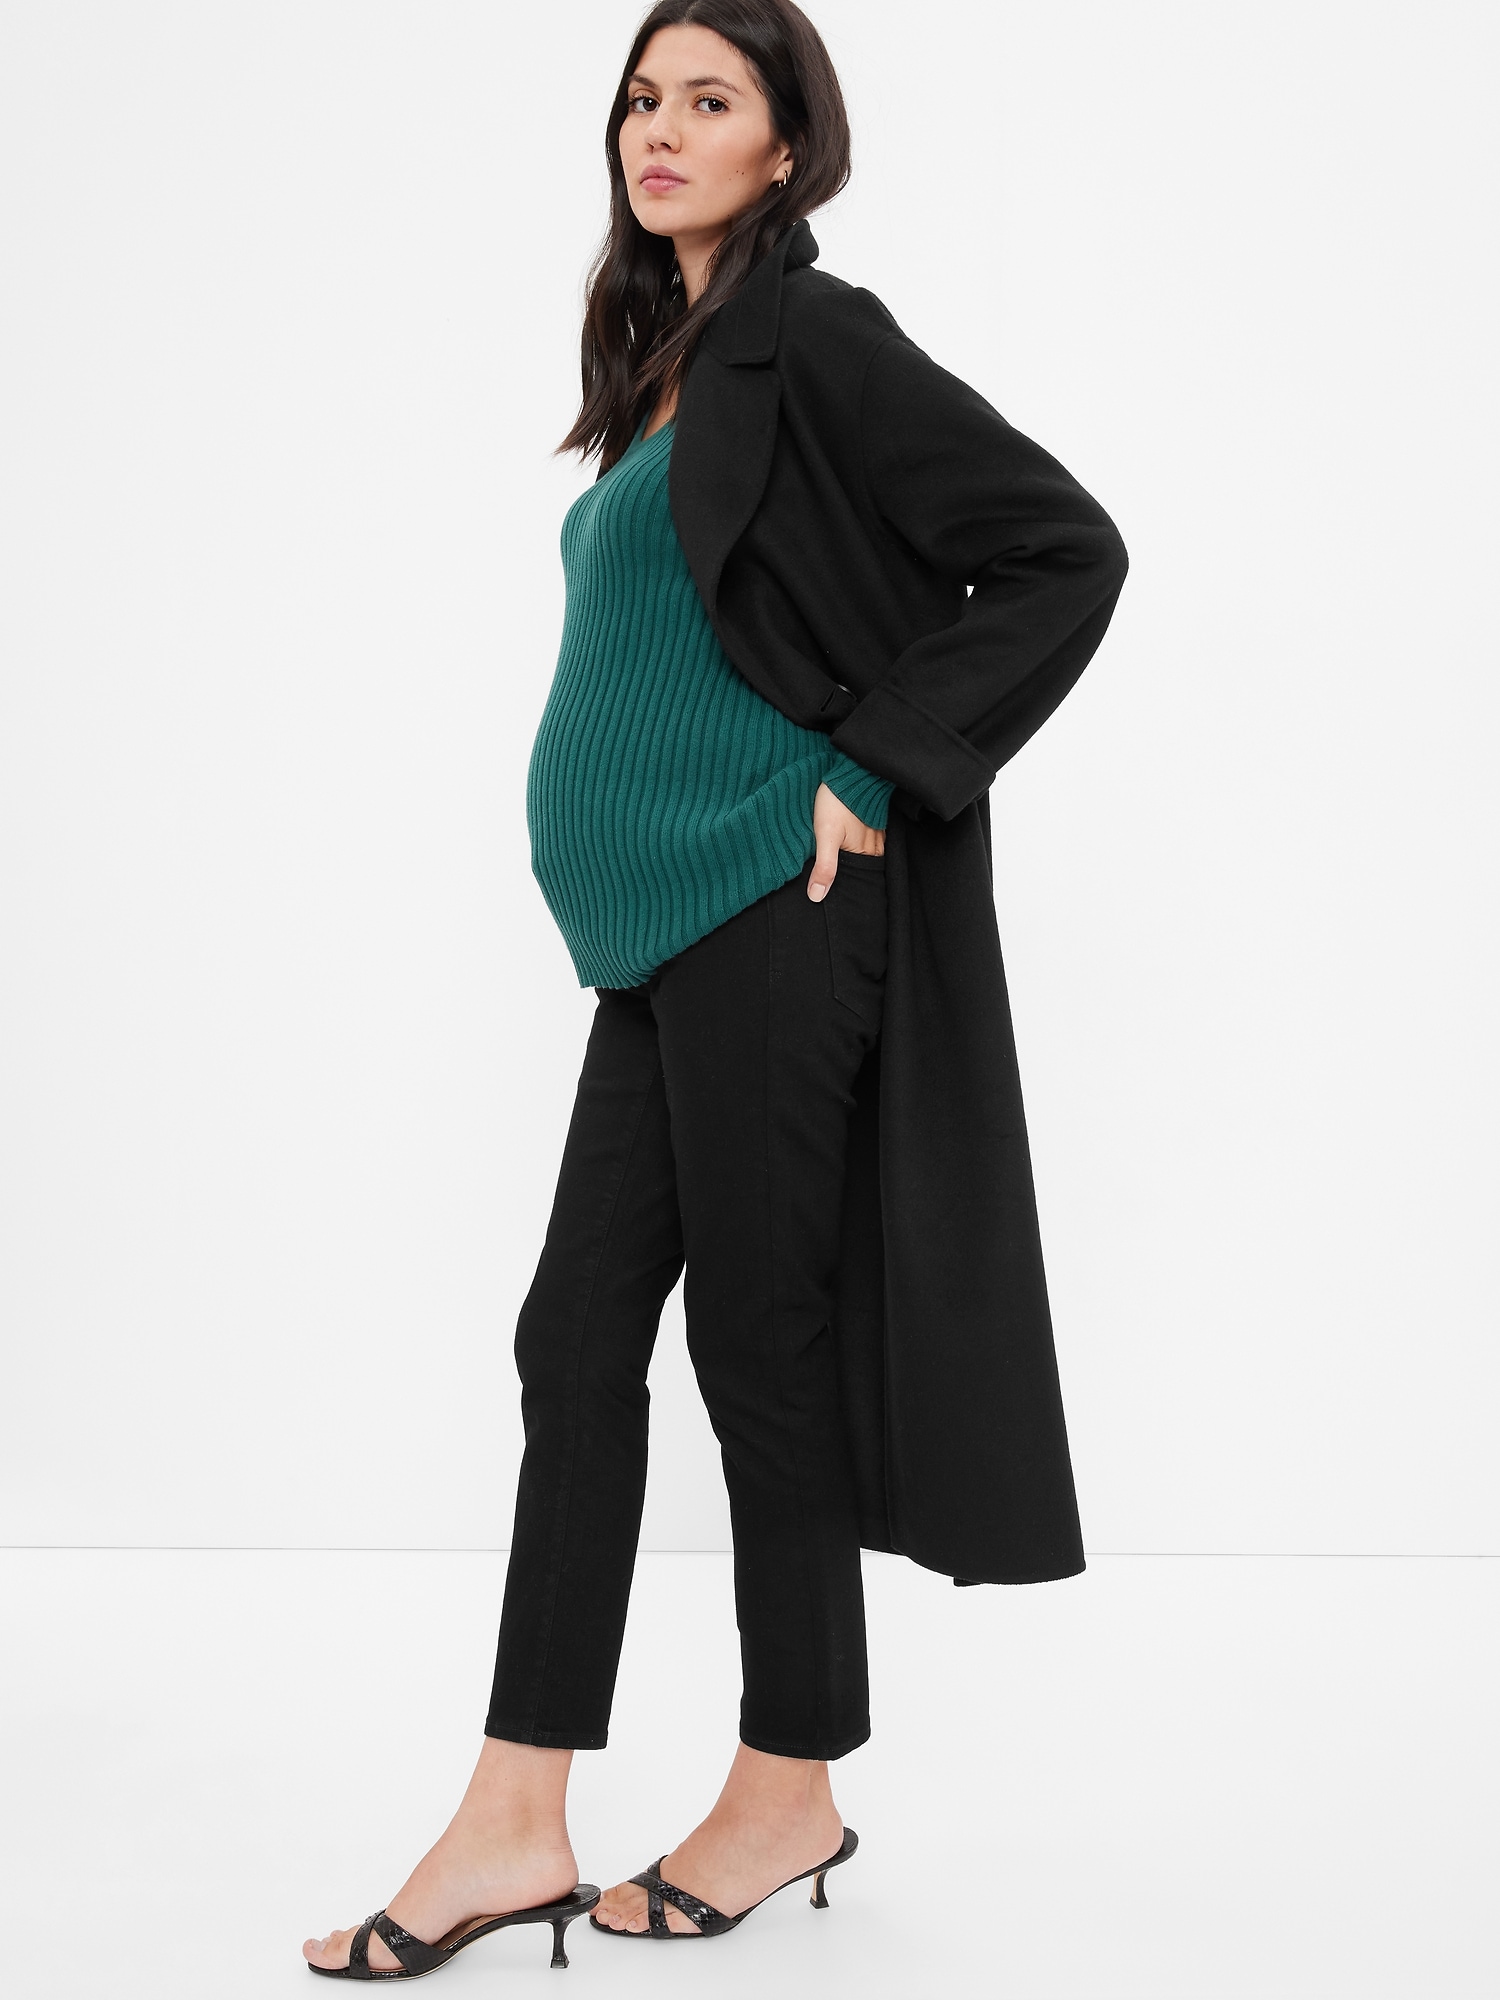 GAP Womens Maternity Inset Panel Skinny Jeans Black WASH 25REG at